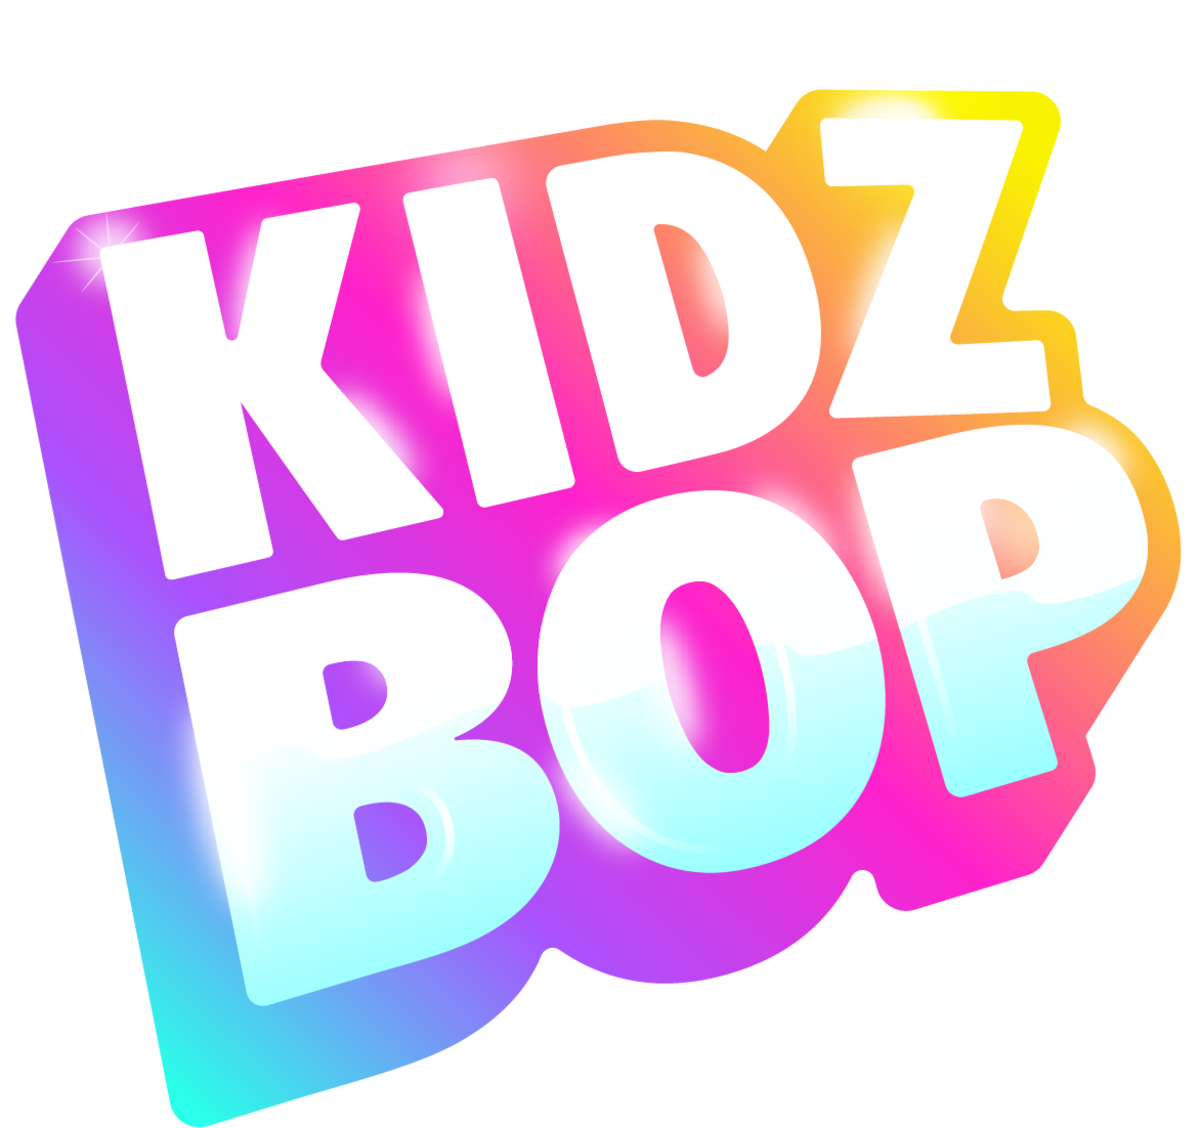 Kidz Bop Kids - Applause [Karaoke]